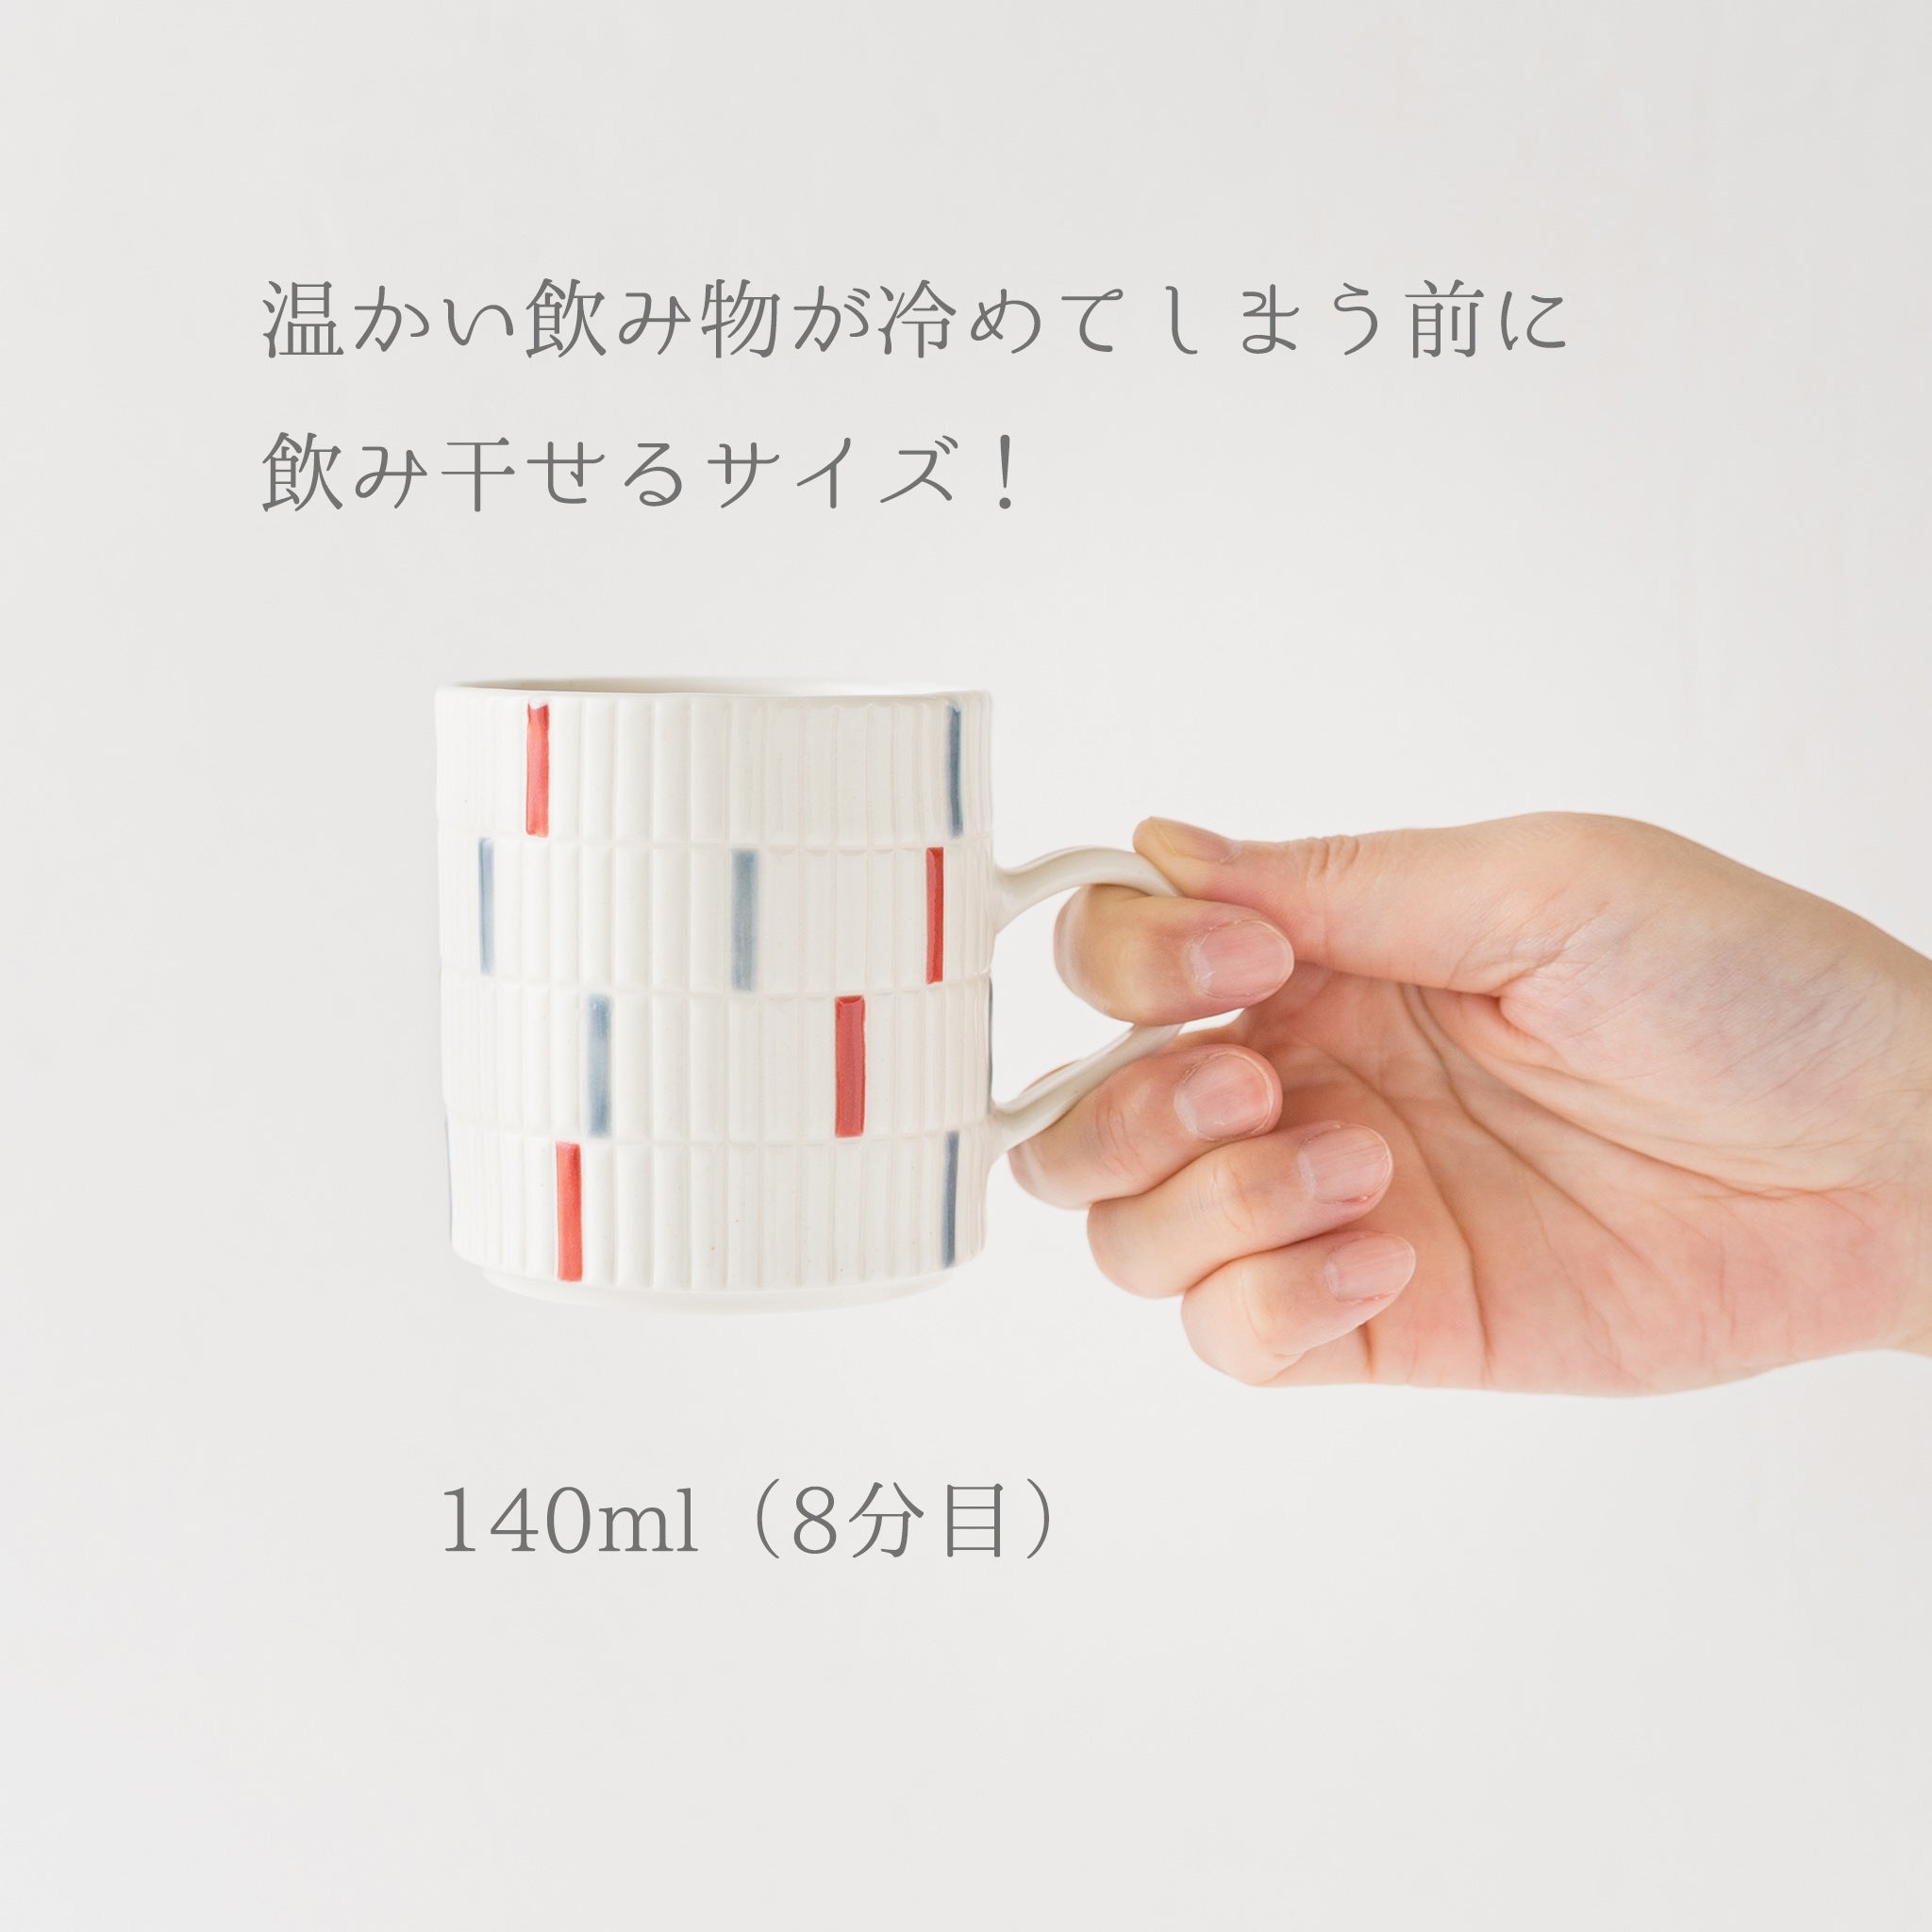 Light and easy to hold Yukari Nakagawa Fashionable and cute mini mug